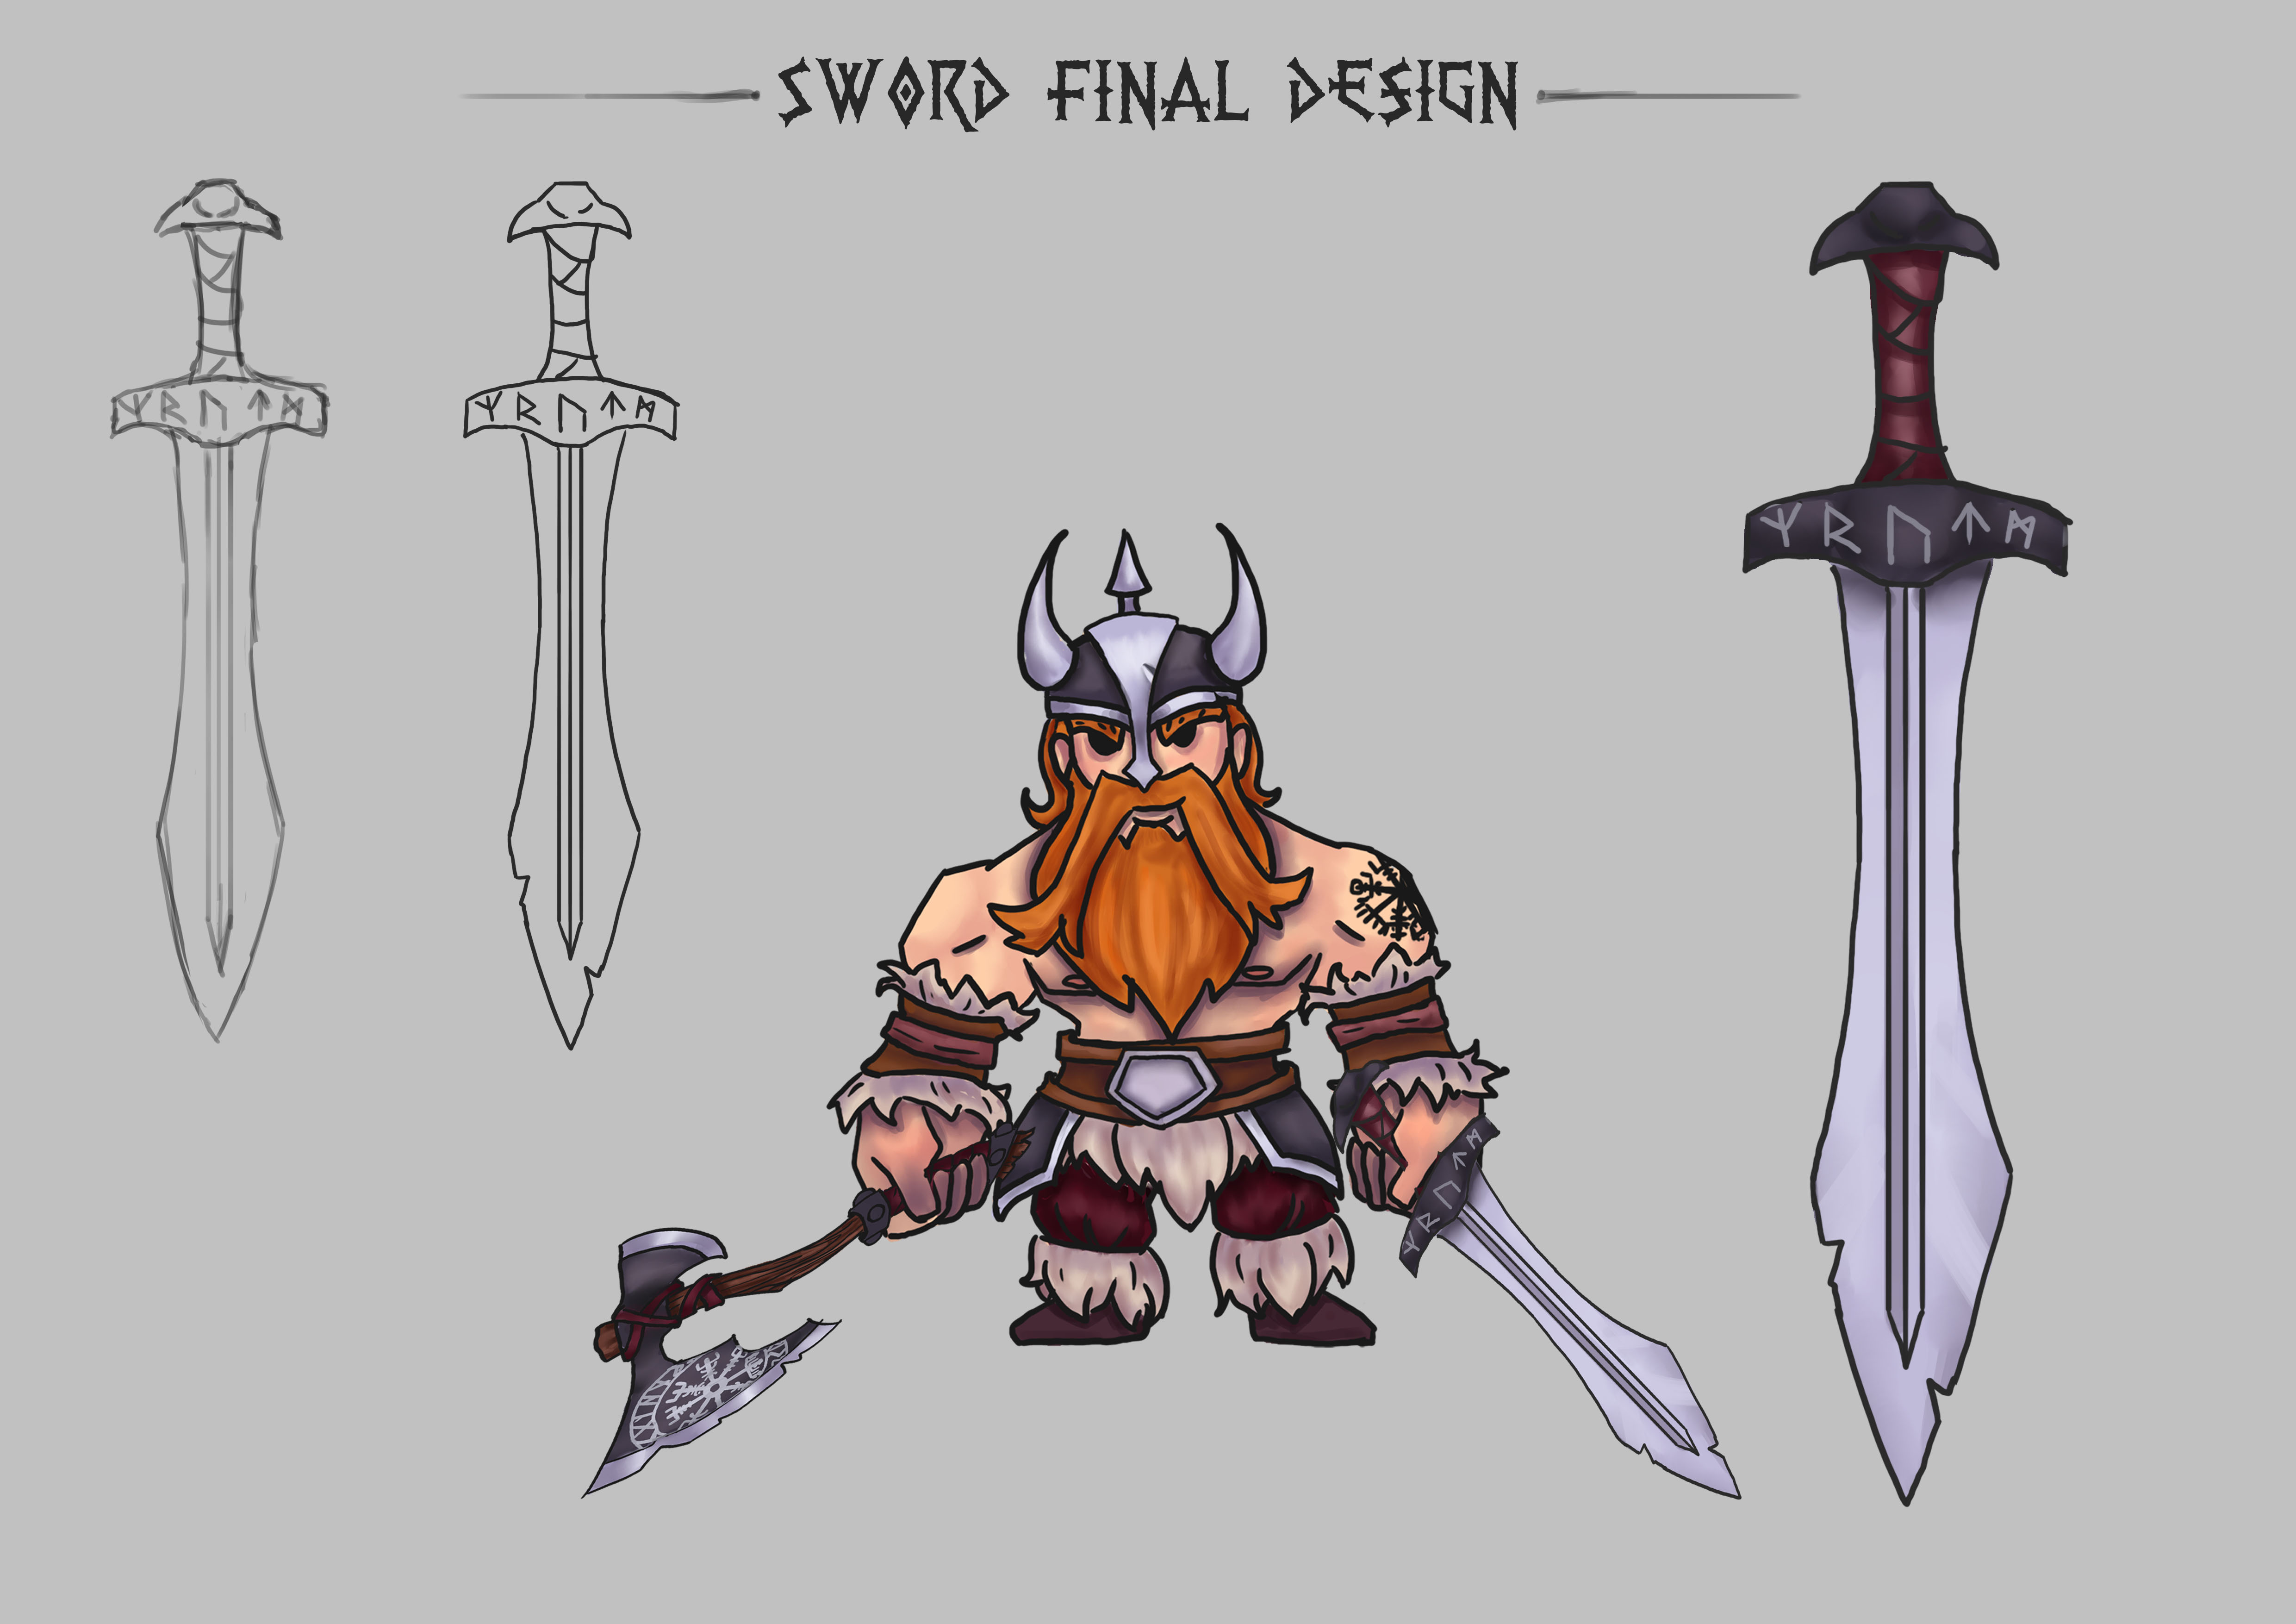 Sword final design